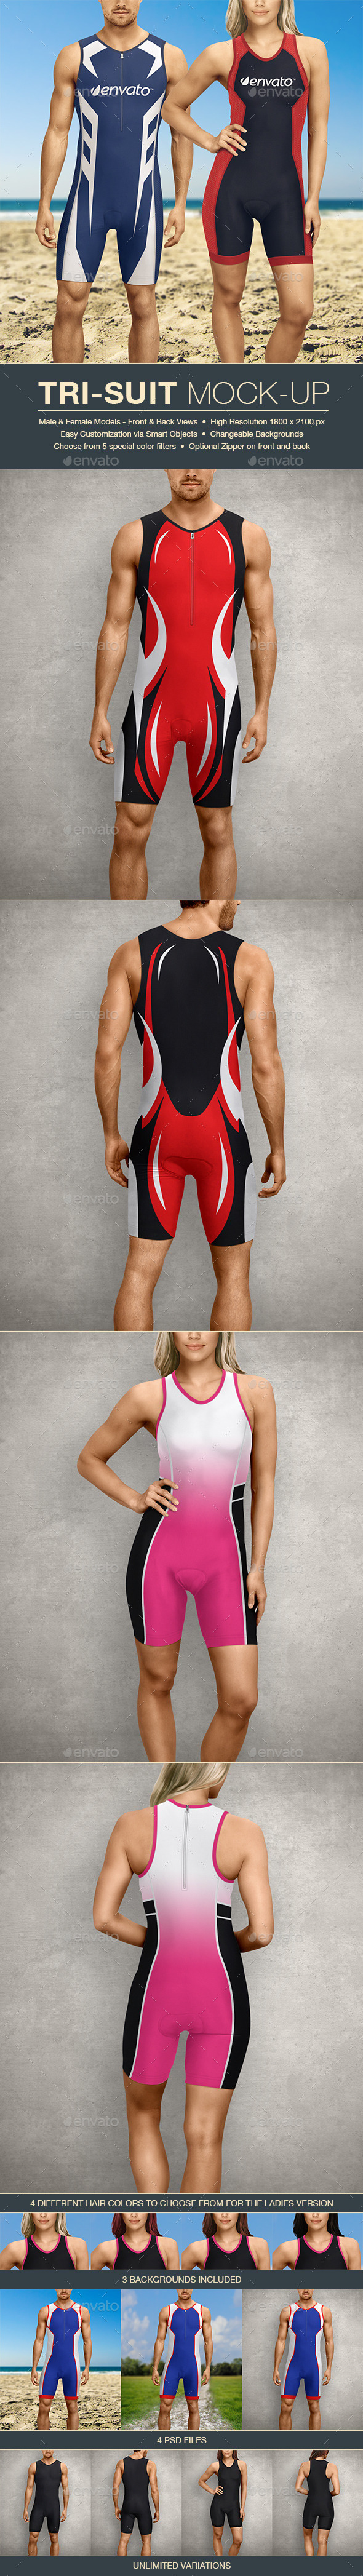 Download Swim Suit Mockup » Tinkytyler.org - Stock Photos & Graphics